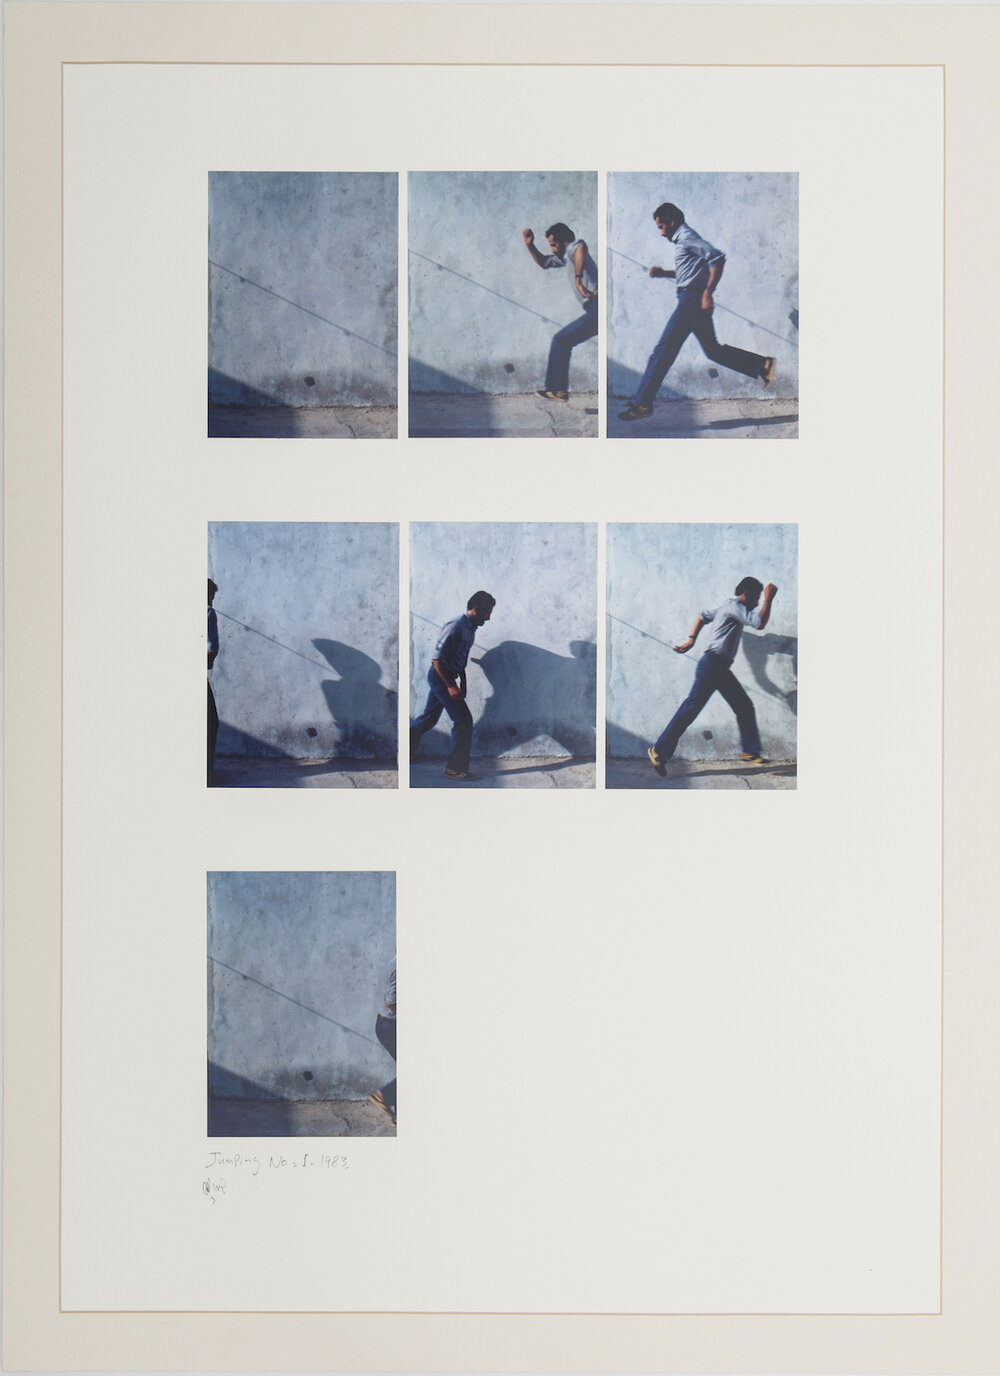 Hassan Sharif, 'Jumping No. 1,' 1983 98 x 73.2 cm Photographs mounted on cardboard Guggenheim, Abu Dhabi.